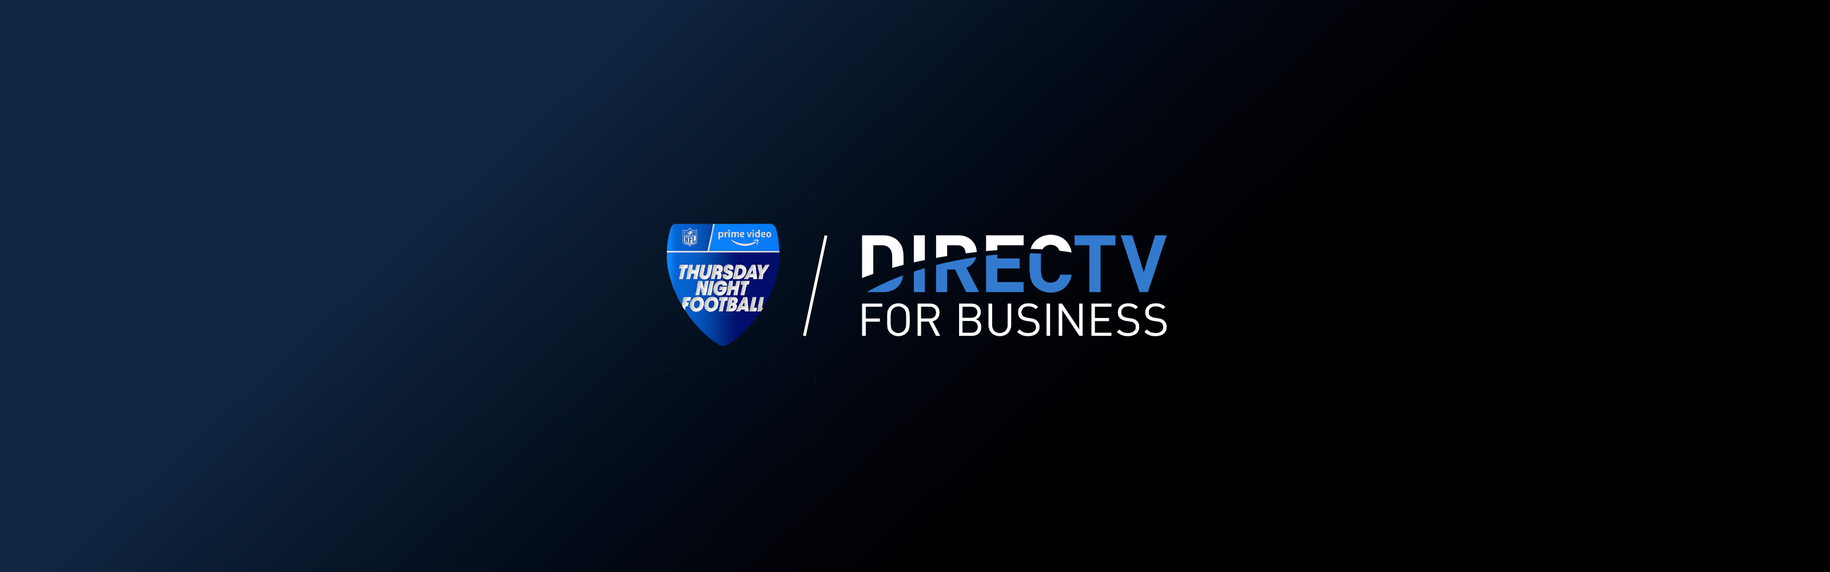 DIRECTV and Prime Video to Host Thursday Night Football DIRECTV Insider